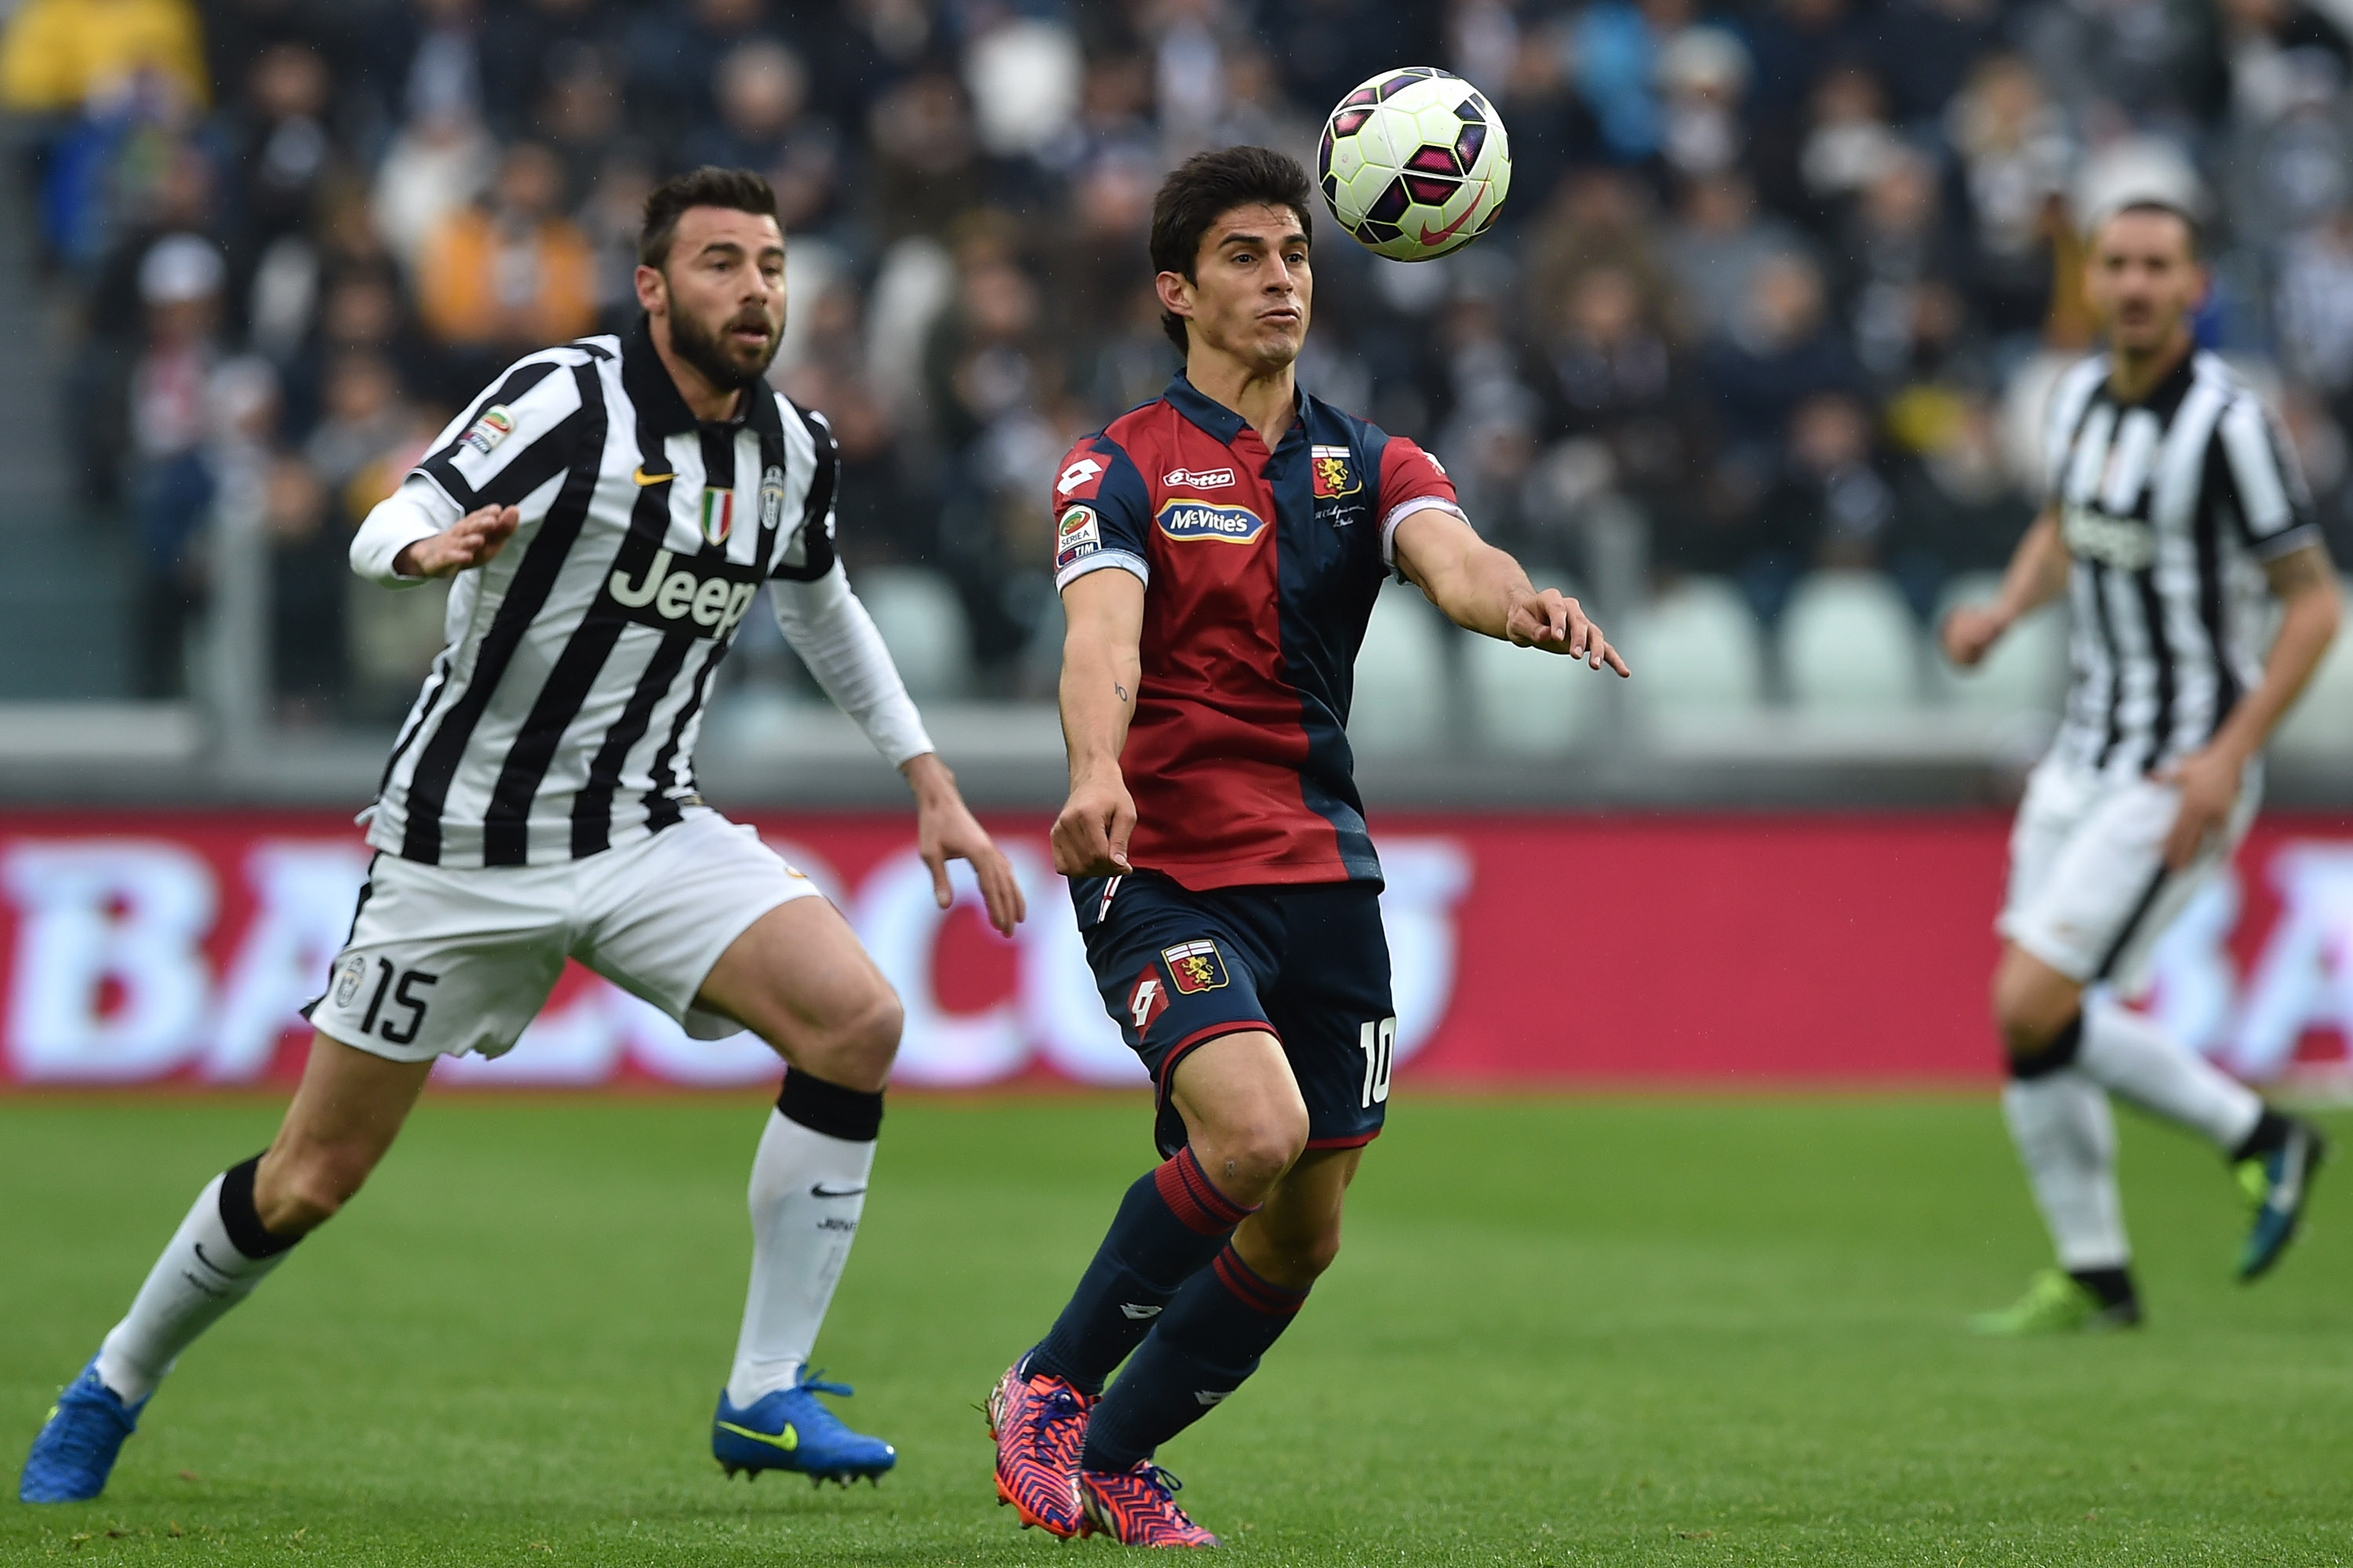 Sampdoria vs Genoa live score, H2H and lineups